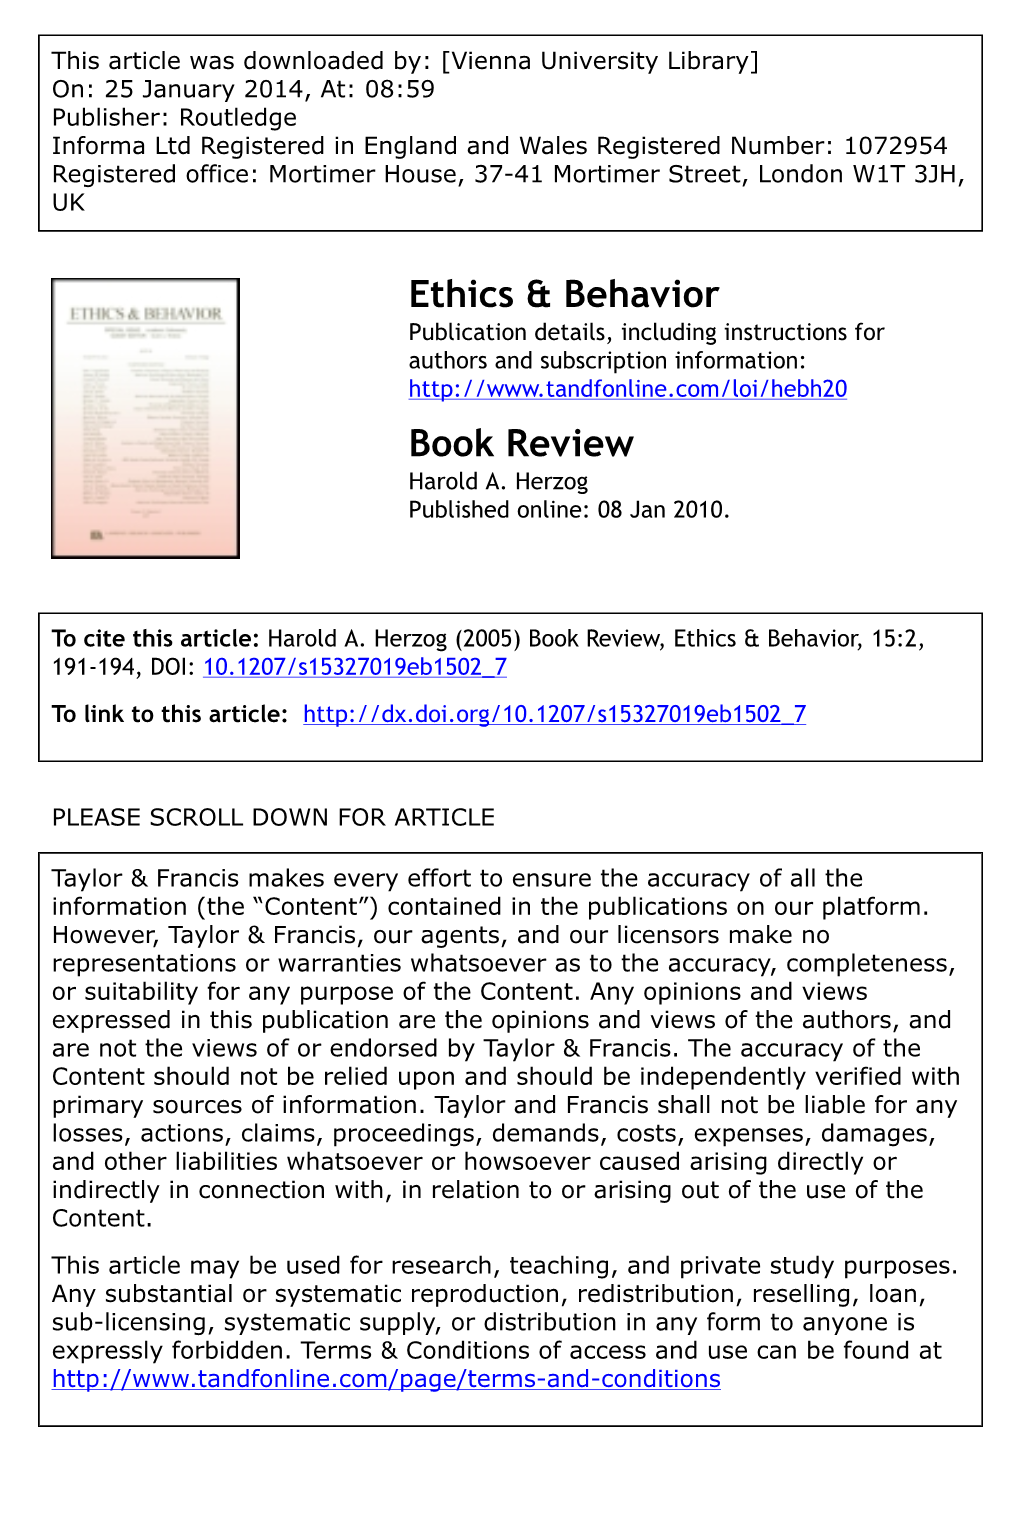 Ethics & Behavior Book Review